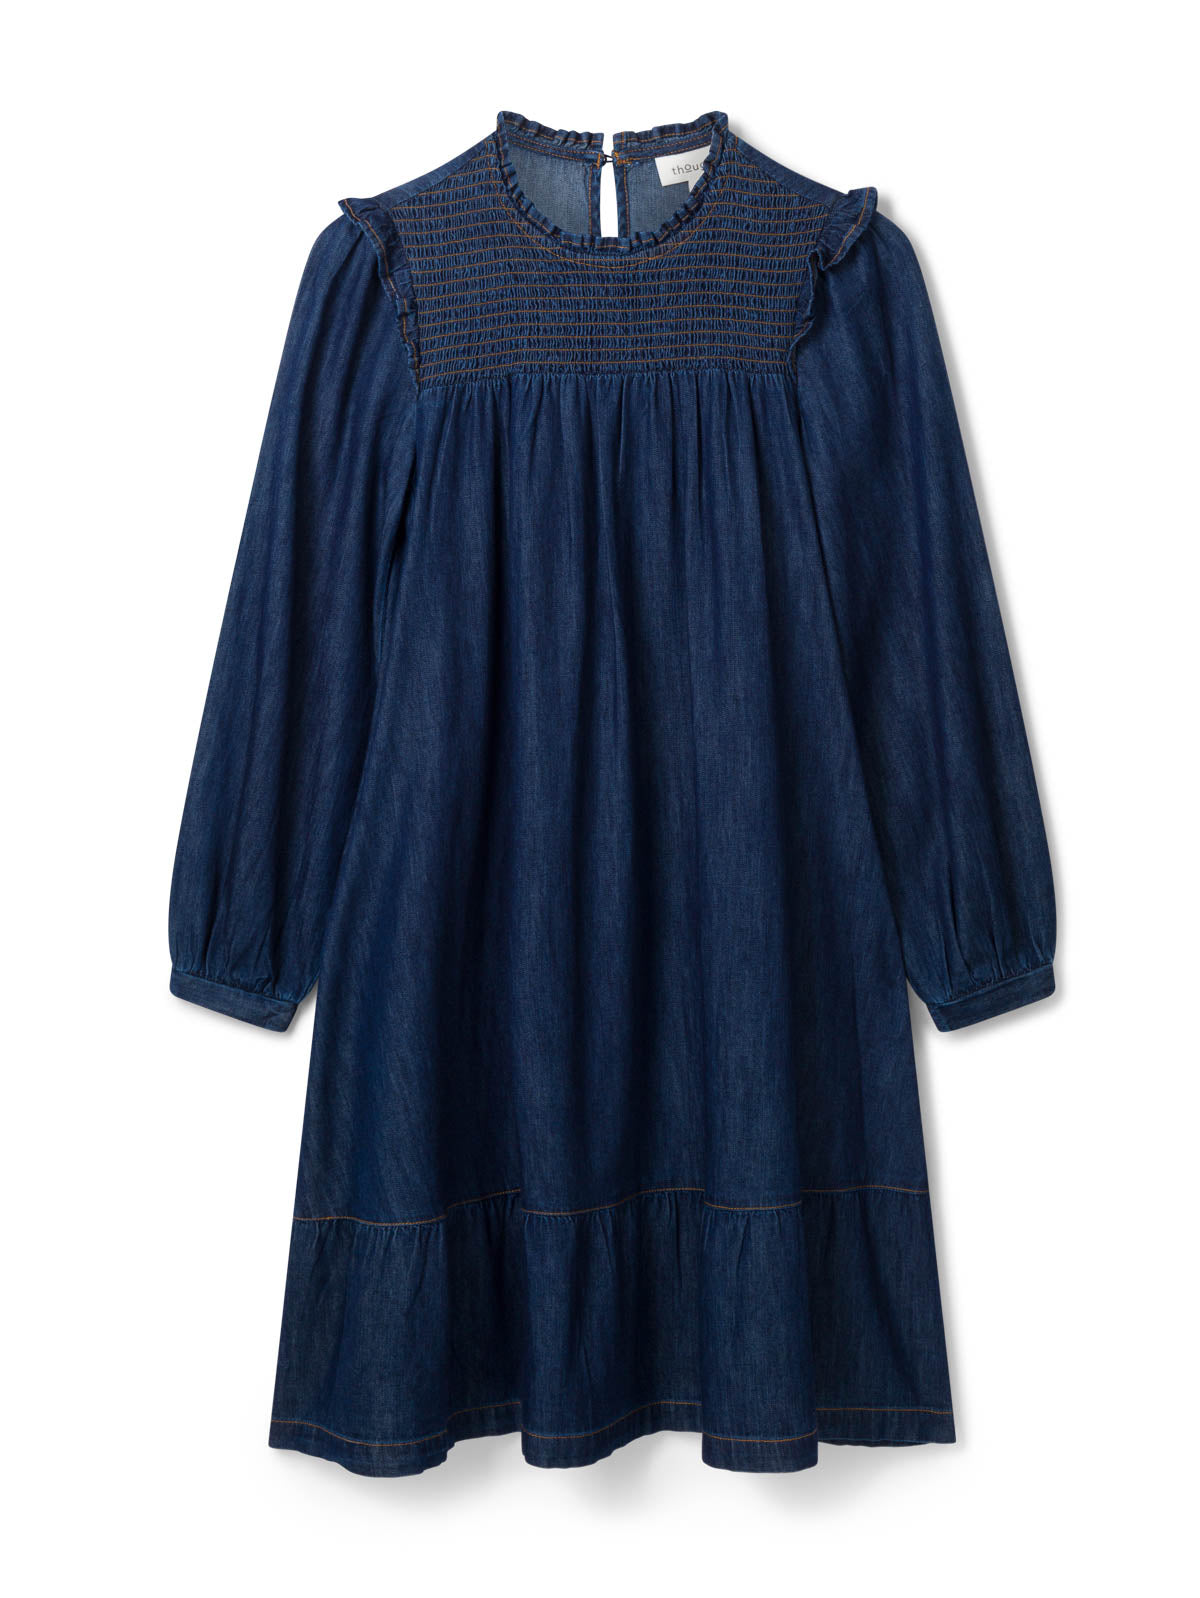 Asterope Organic Cotton Chambray Smock Dress - Dark Indigo Blue